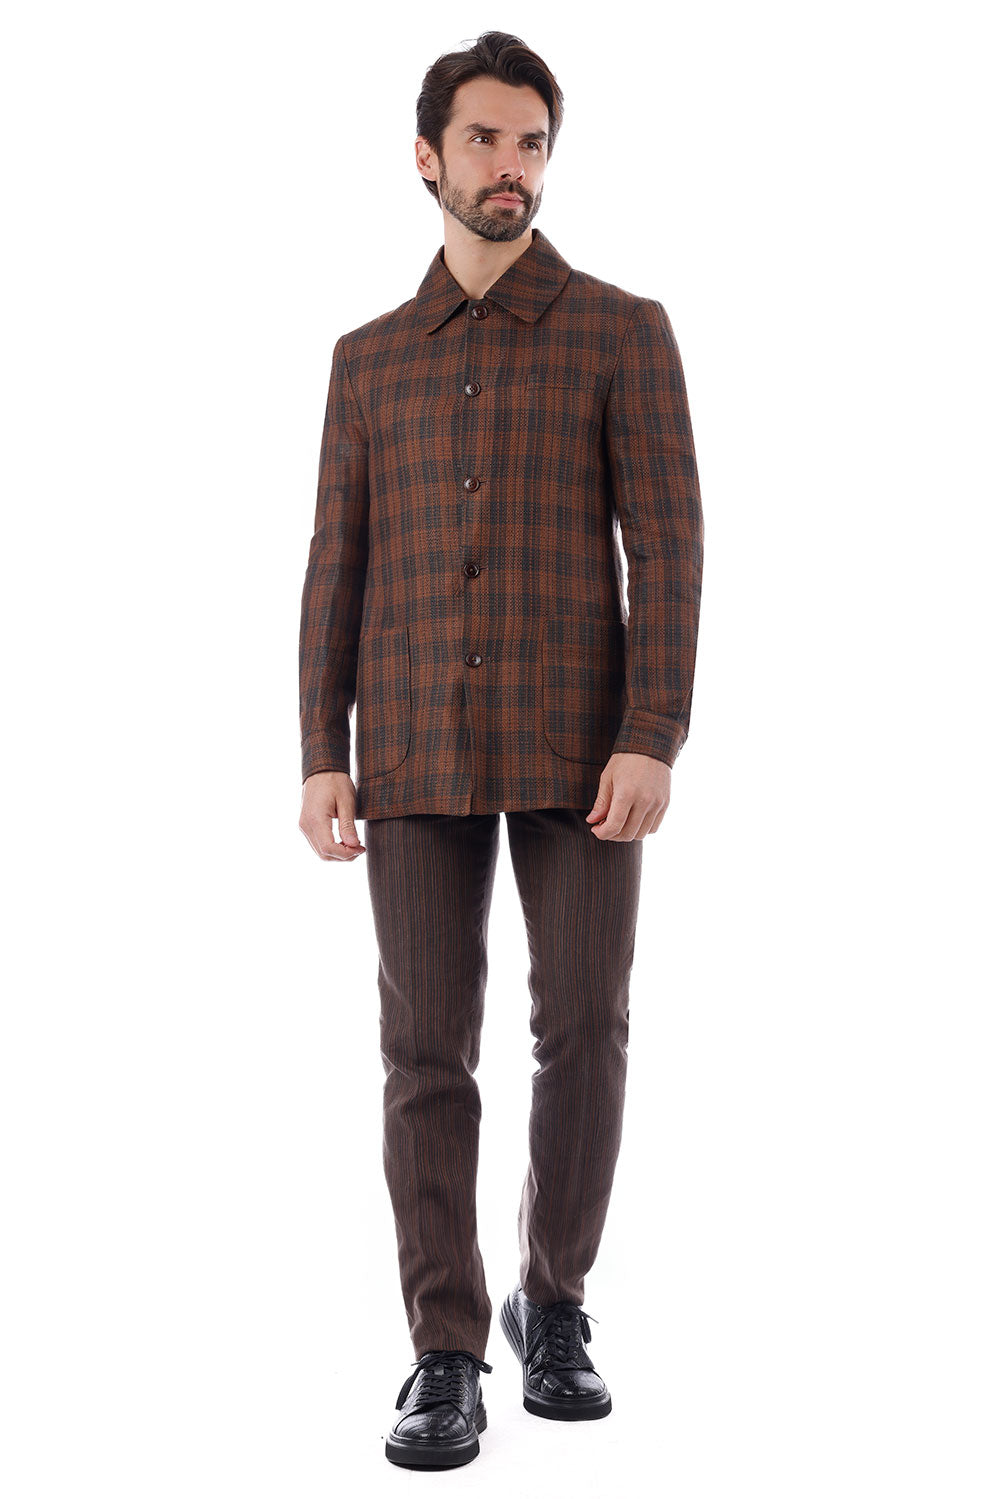 BARABAS Men's Plaid Polo Collar Linen Pant and Suit Set 4SU11 Brown